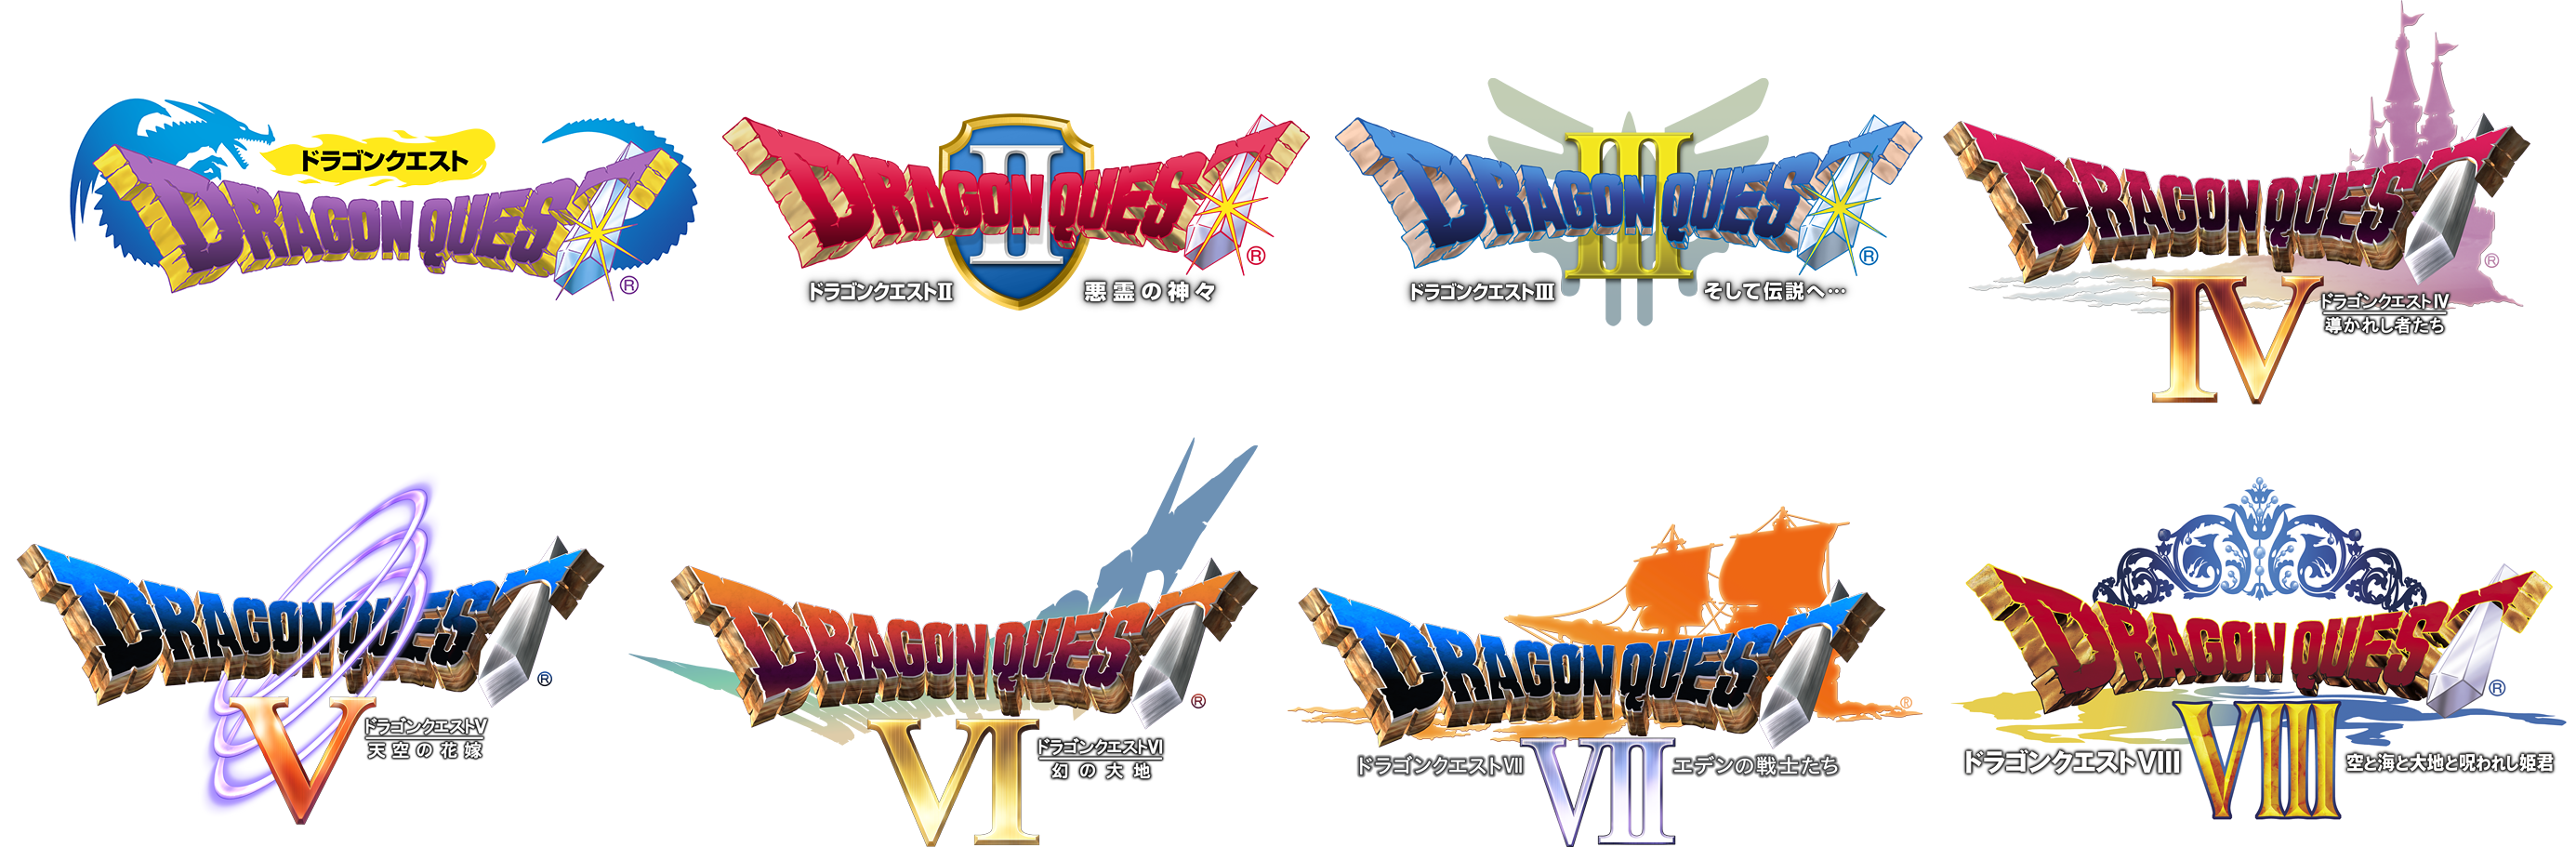 Dragon Quest mobile - logos